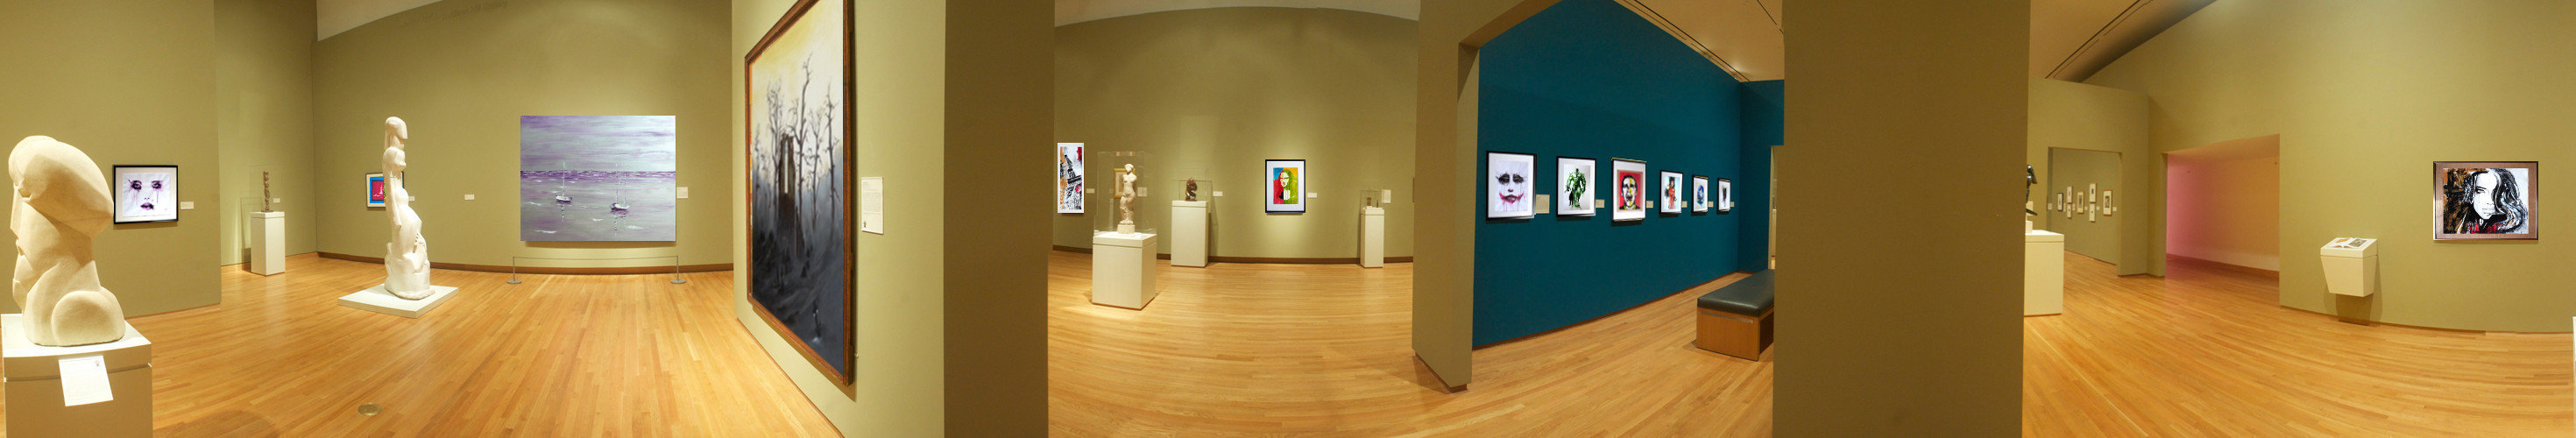 Galerie d'art virtuelle